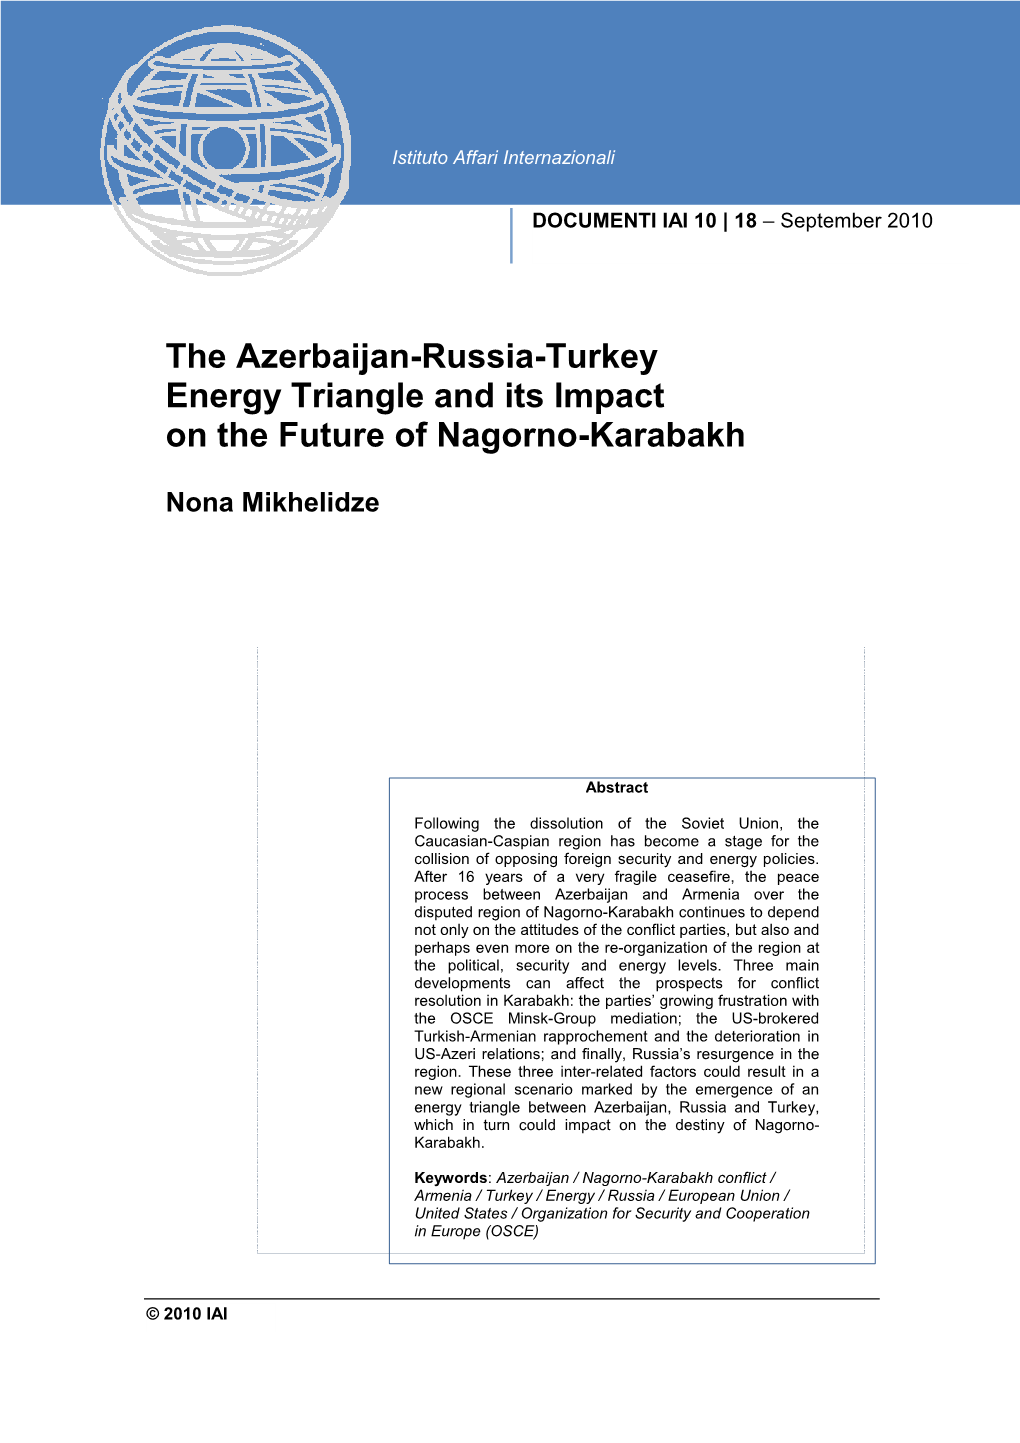 The Azerbaijan-Russia-Turkey Energy Triangle and Its Impact on the Future of Nagorno-Karabakh